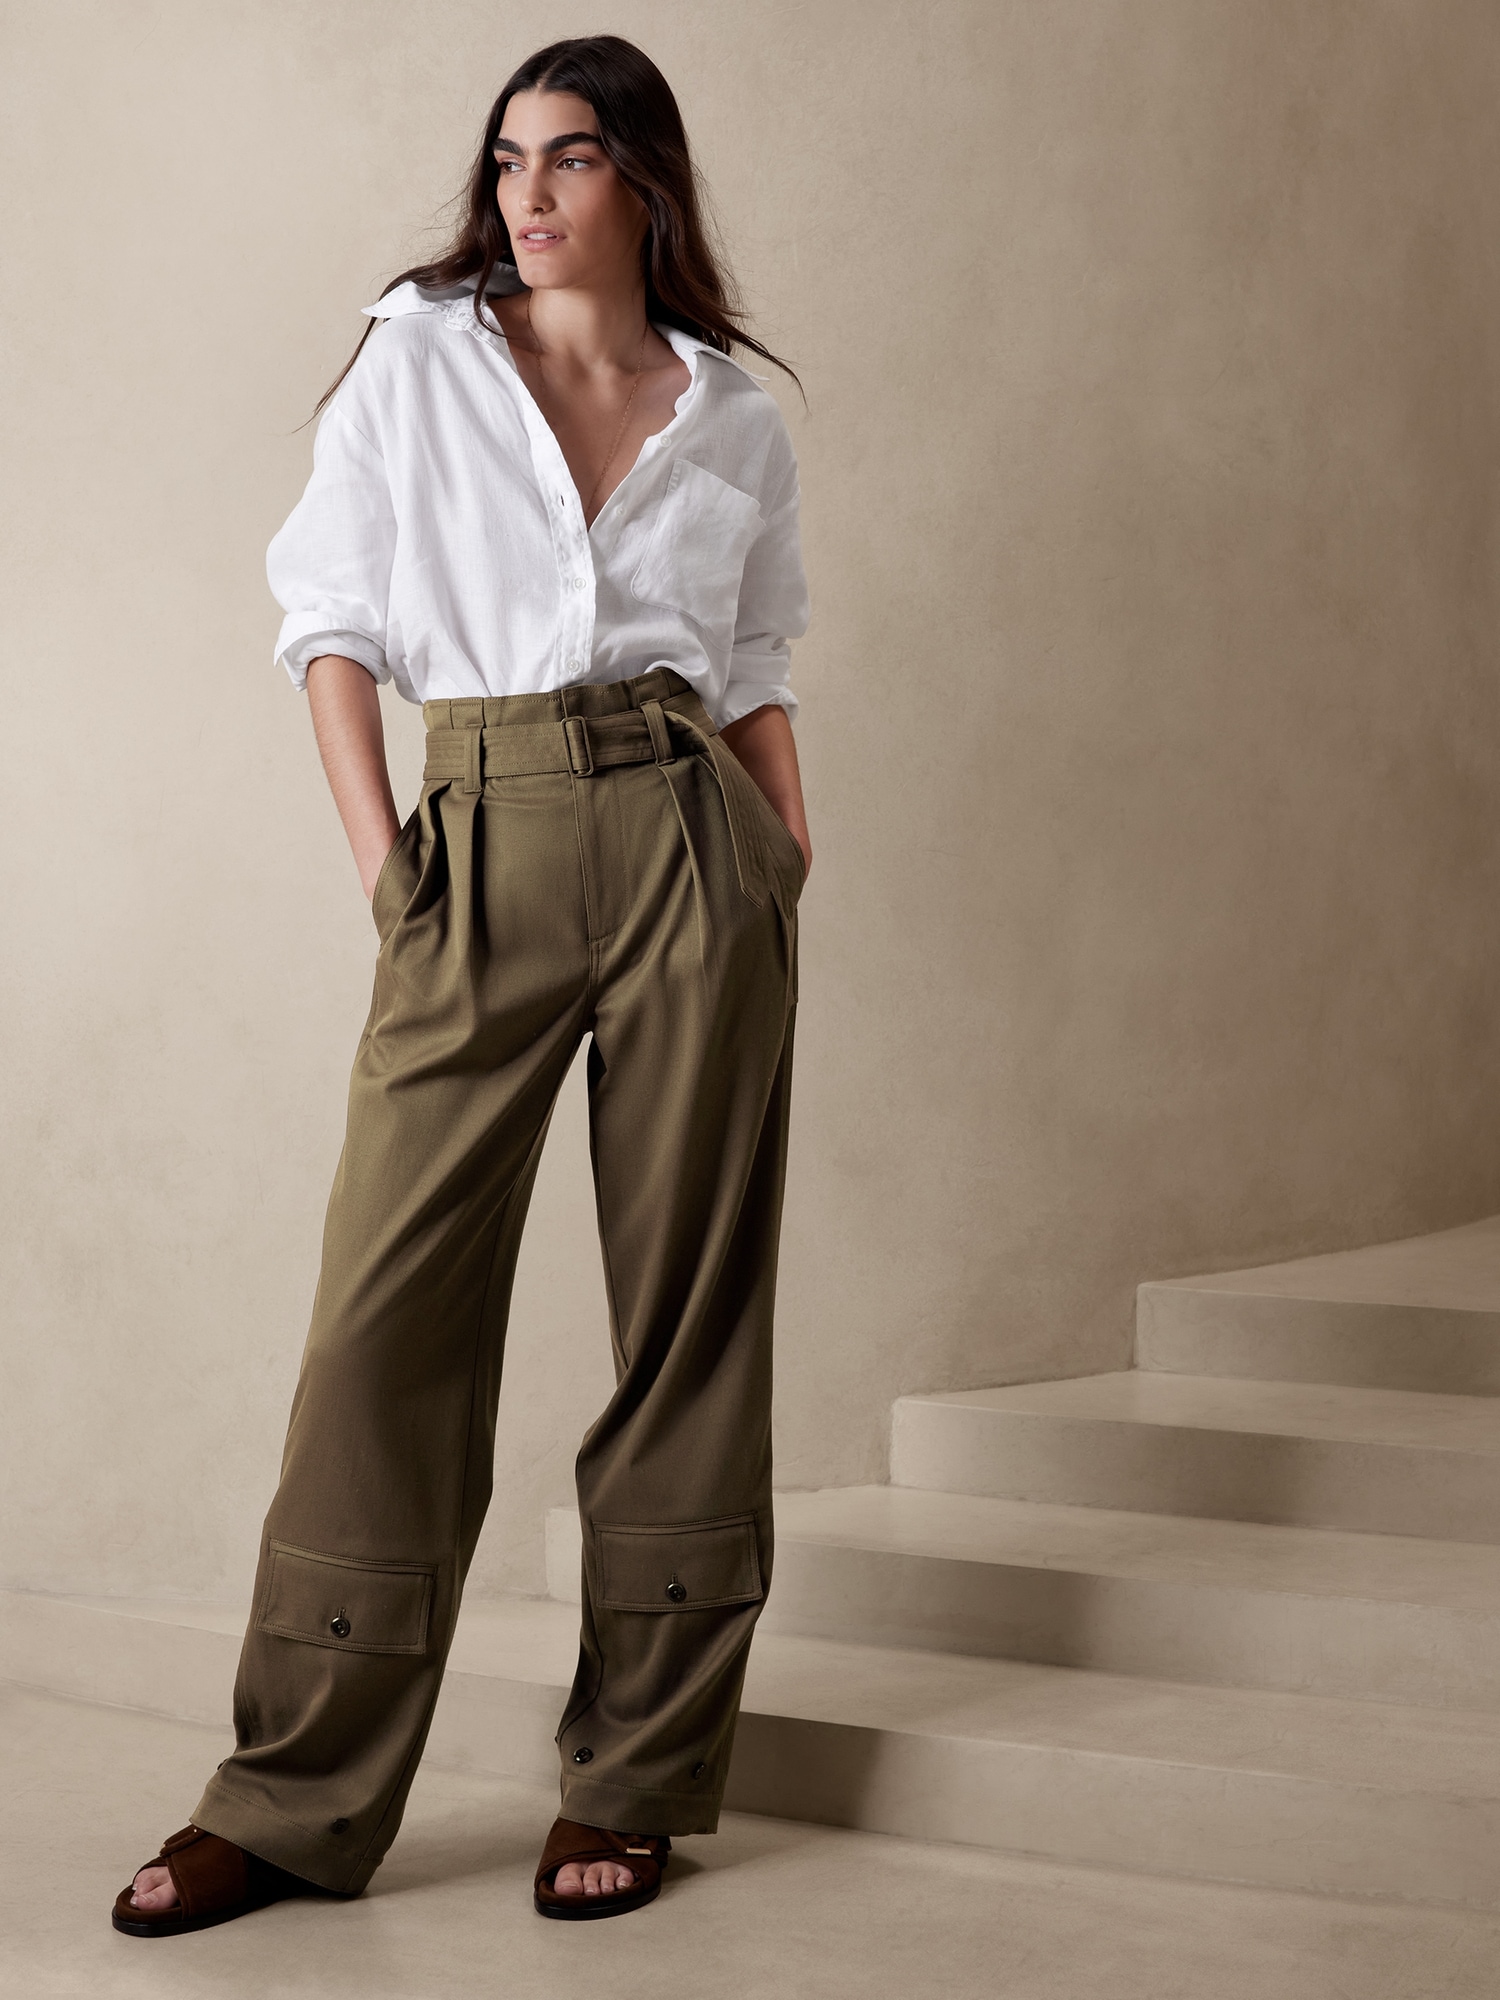 Our Favorite WideLeg Pants For Spring and Summer  POPSUGAR Fashion